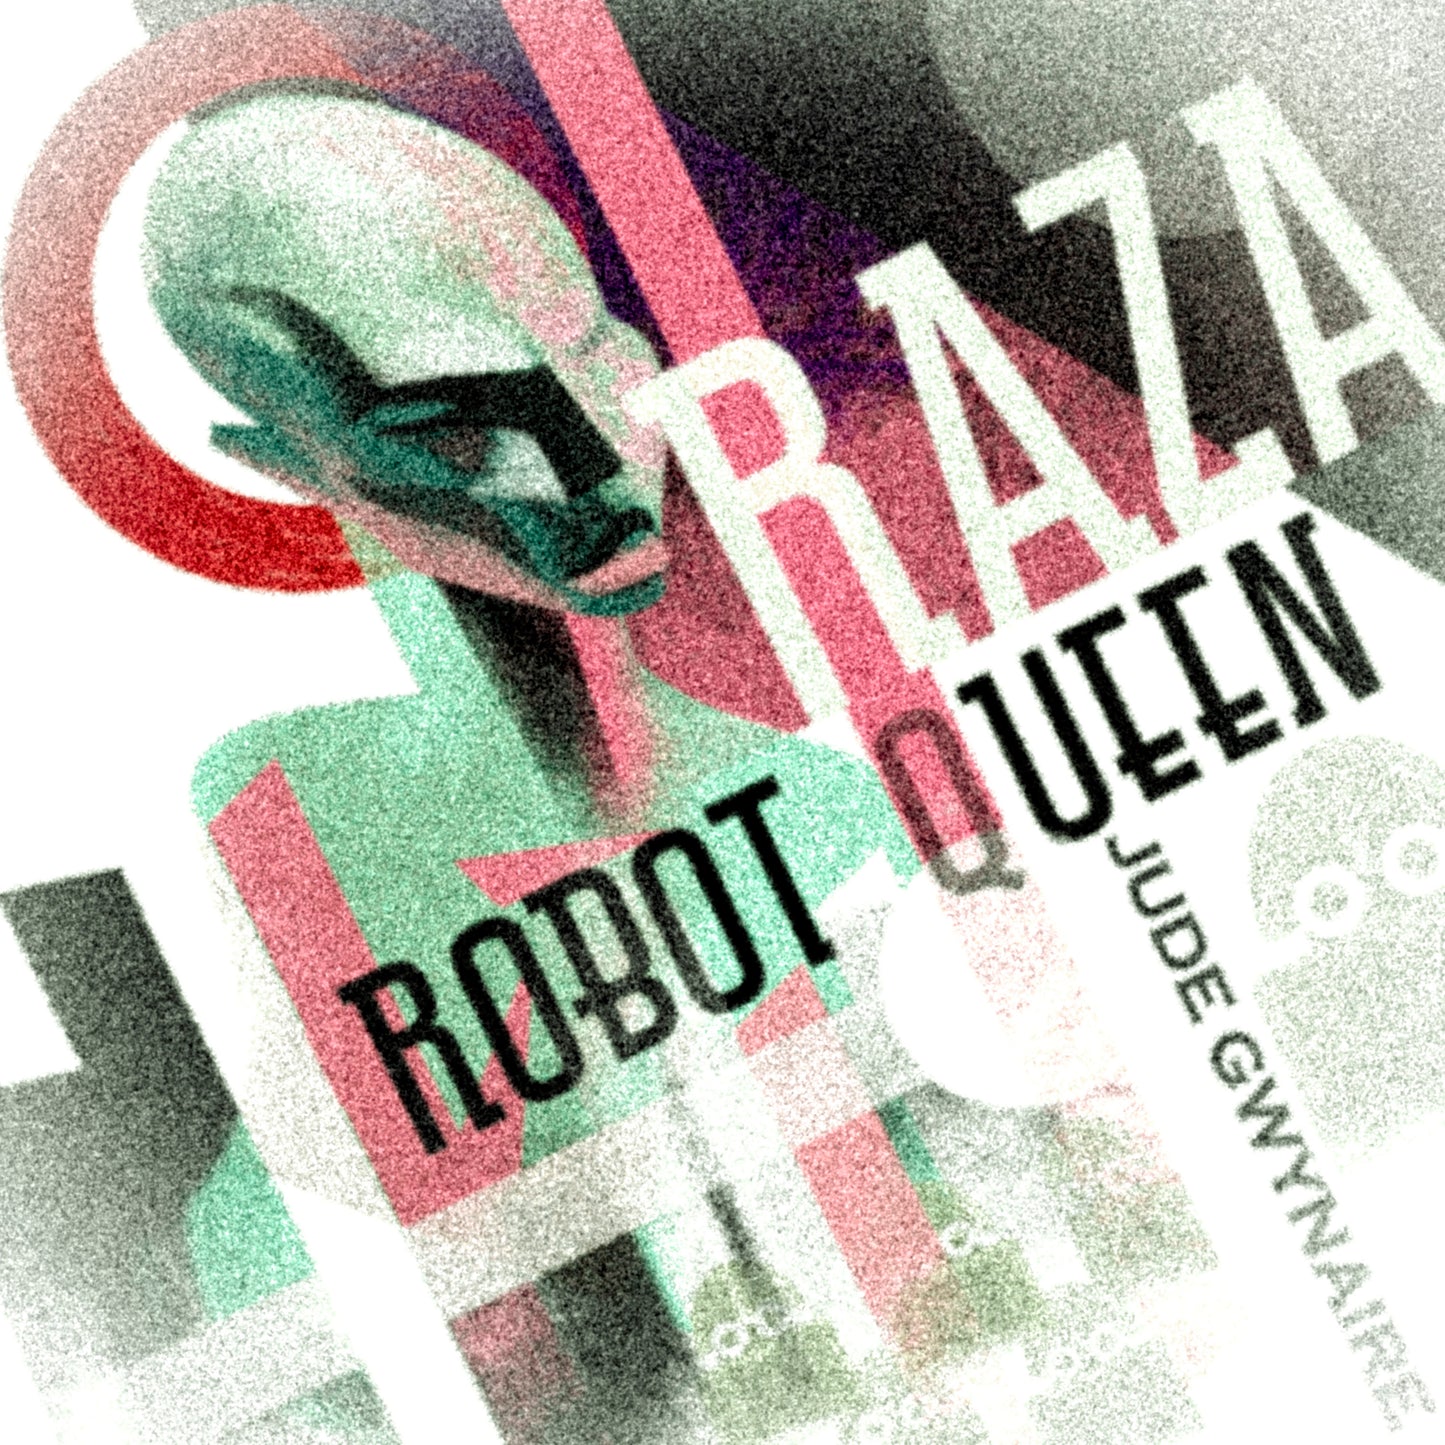 Raza, Robot Queen